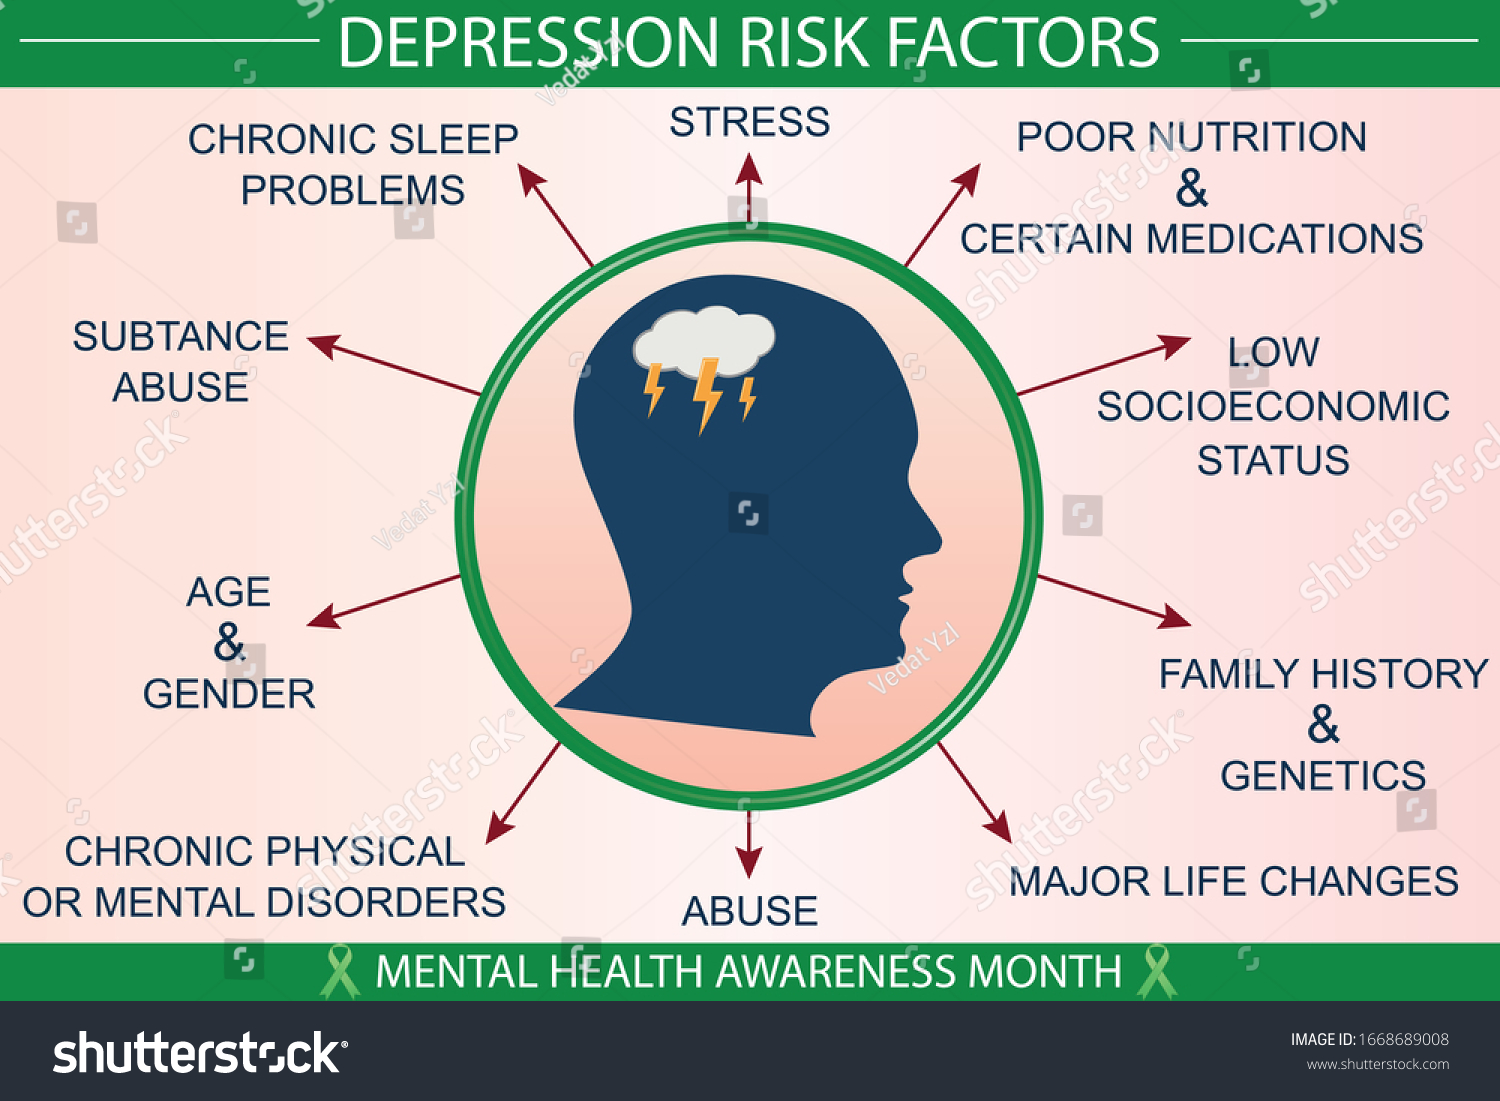 Depression Risk Factors Infographic Vector Illustration เวกเตอร์สต็อก